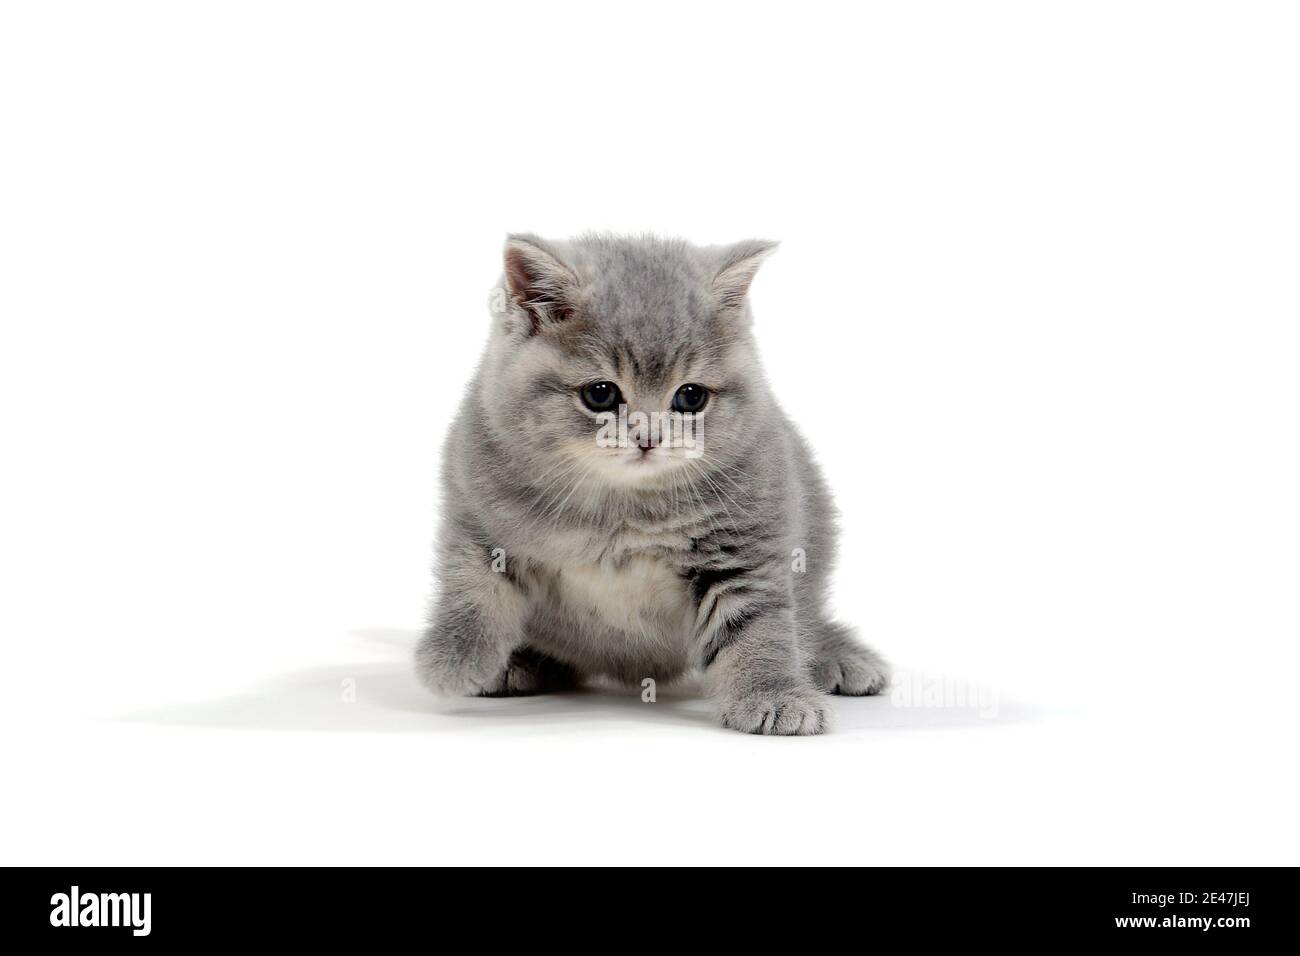 Purebred kitten on a white background Stock Photo